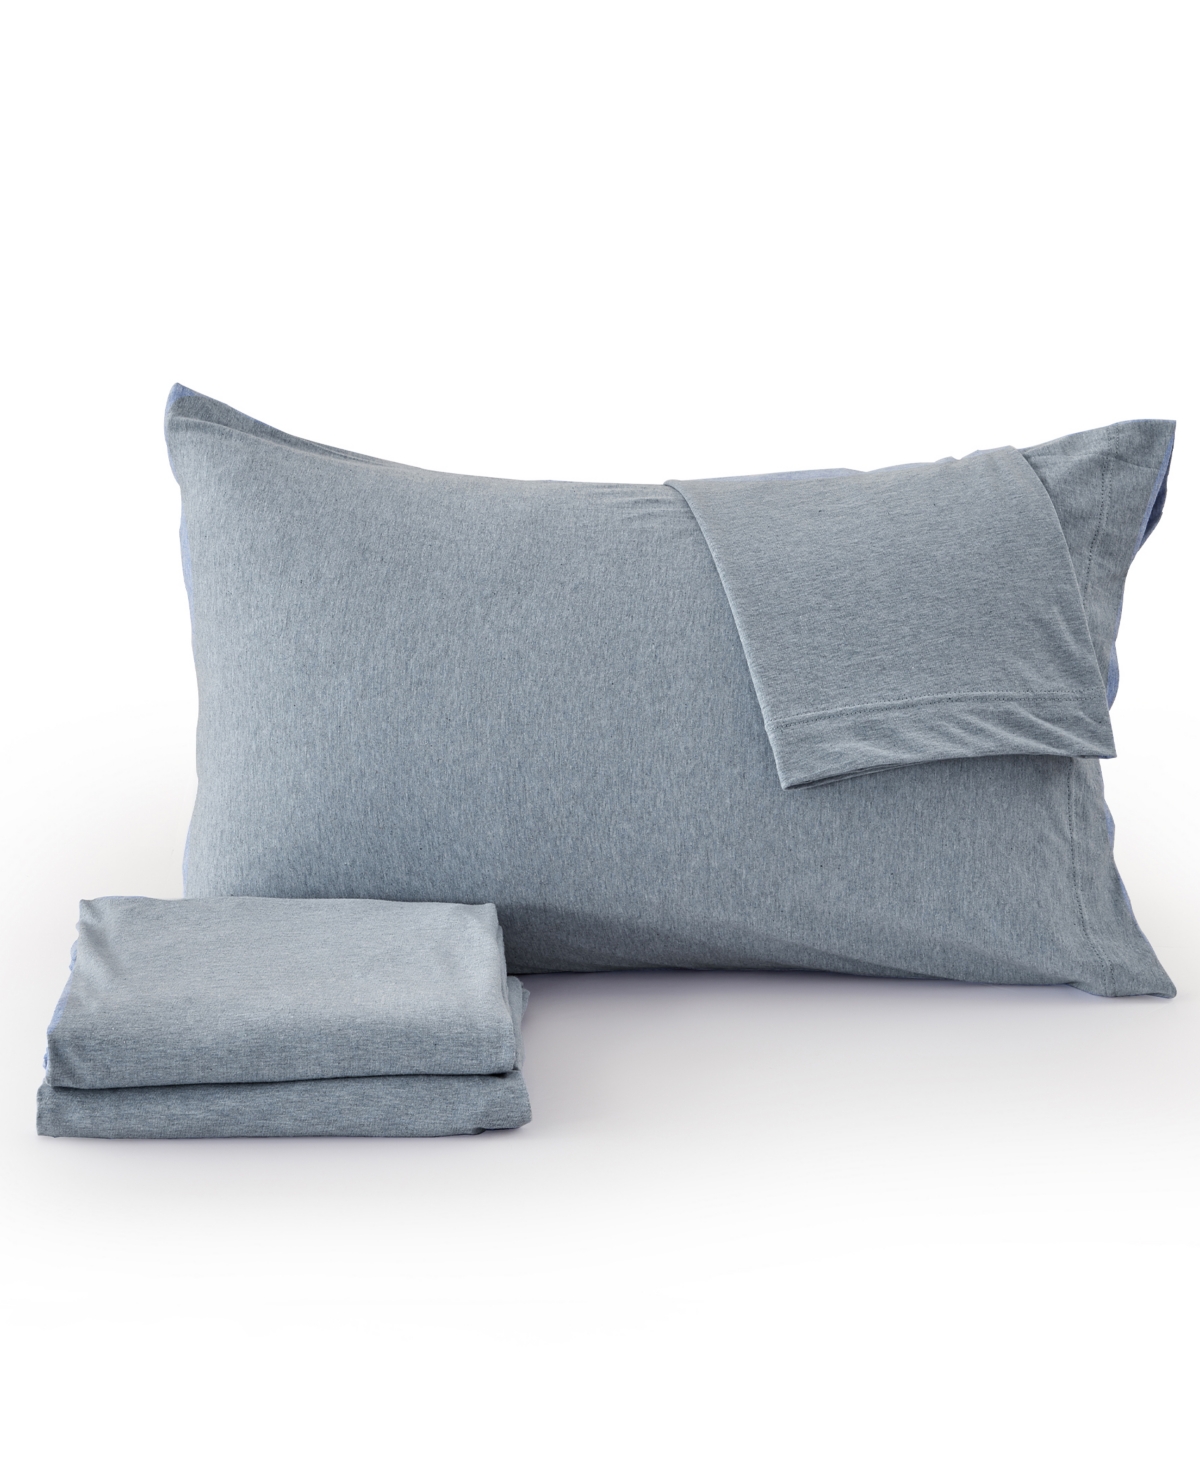 Premium Comforts Heathered Melange T-shirt Jersey Knit Cotton Blend 4 Piece Sheet Set, Full In Sky Blue